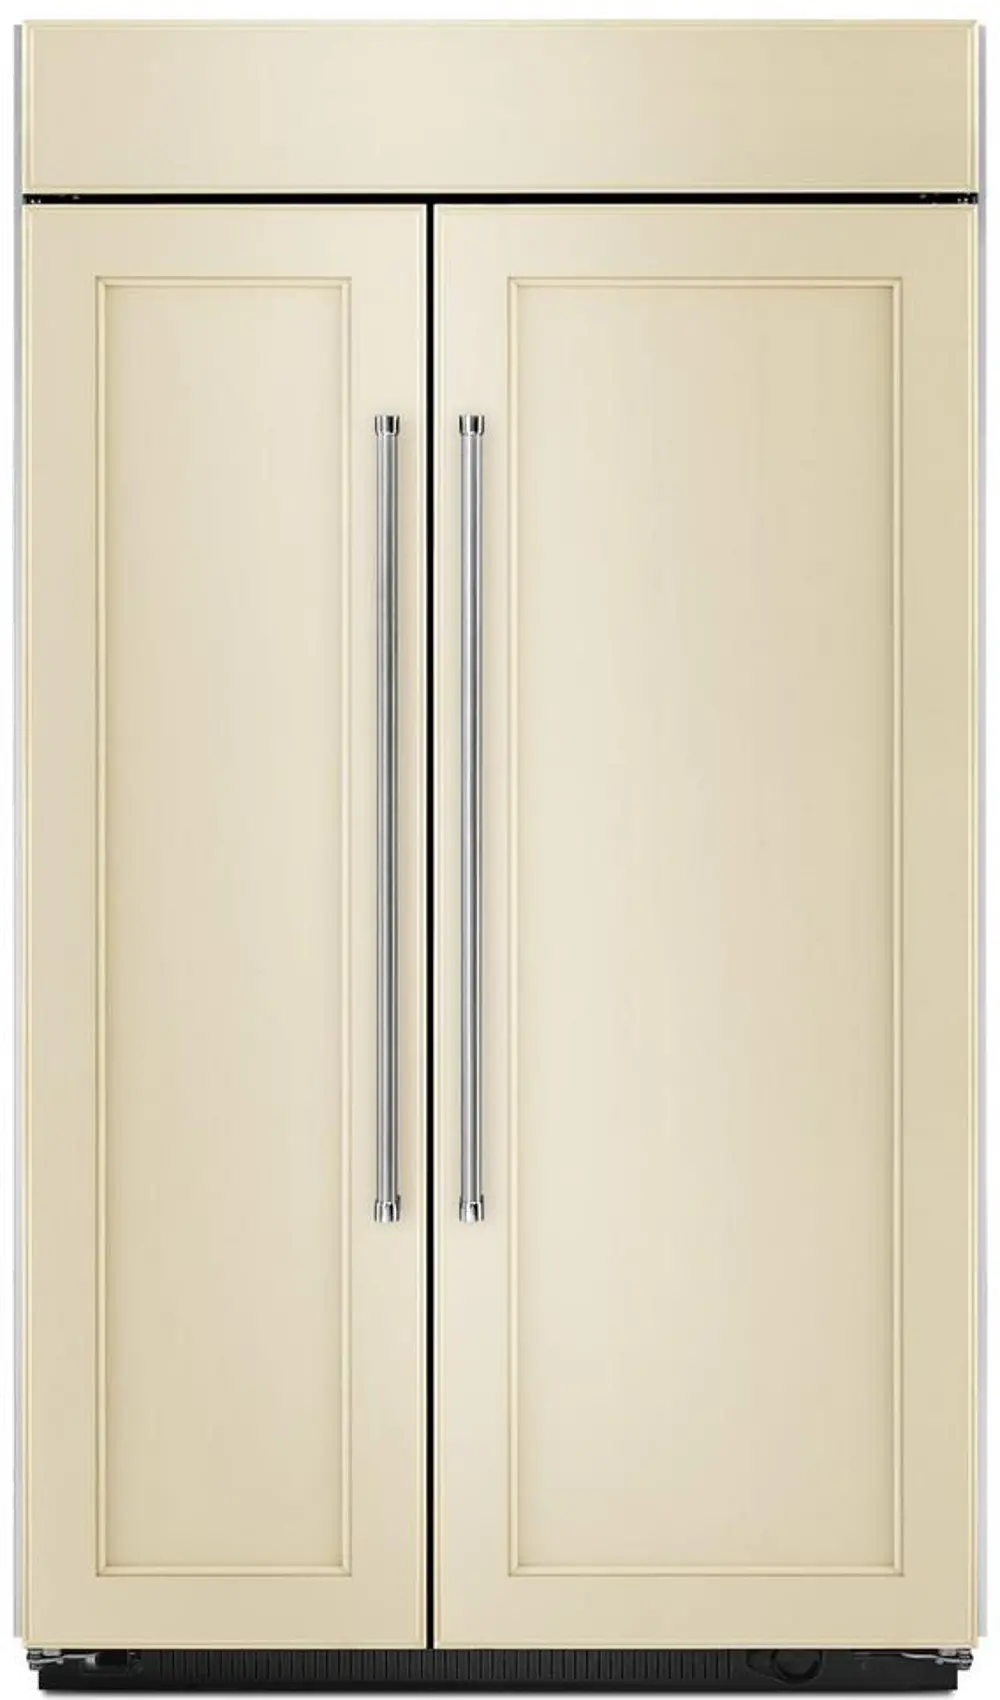 KBSN608EPA KitchenAid Built-In Side by Side Refrigerator - 48 Inch Panel Ready-1